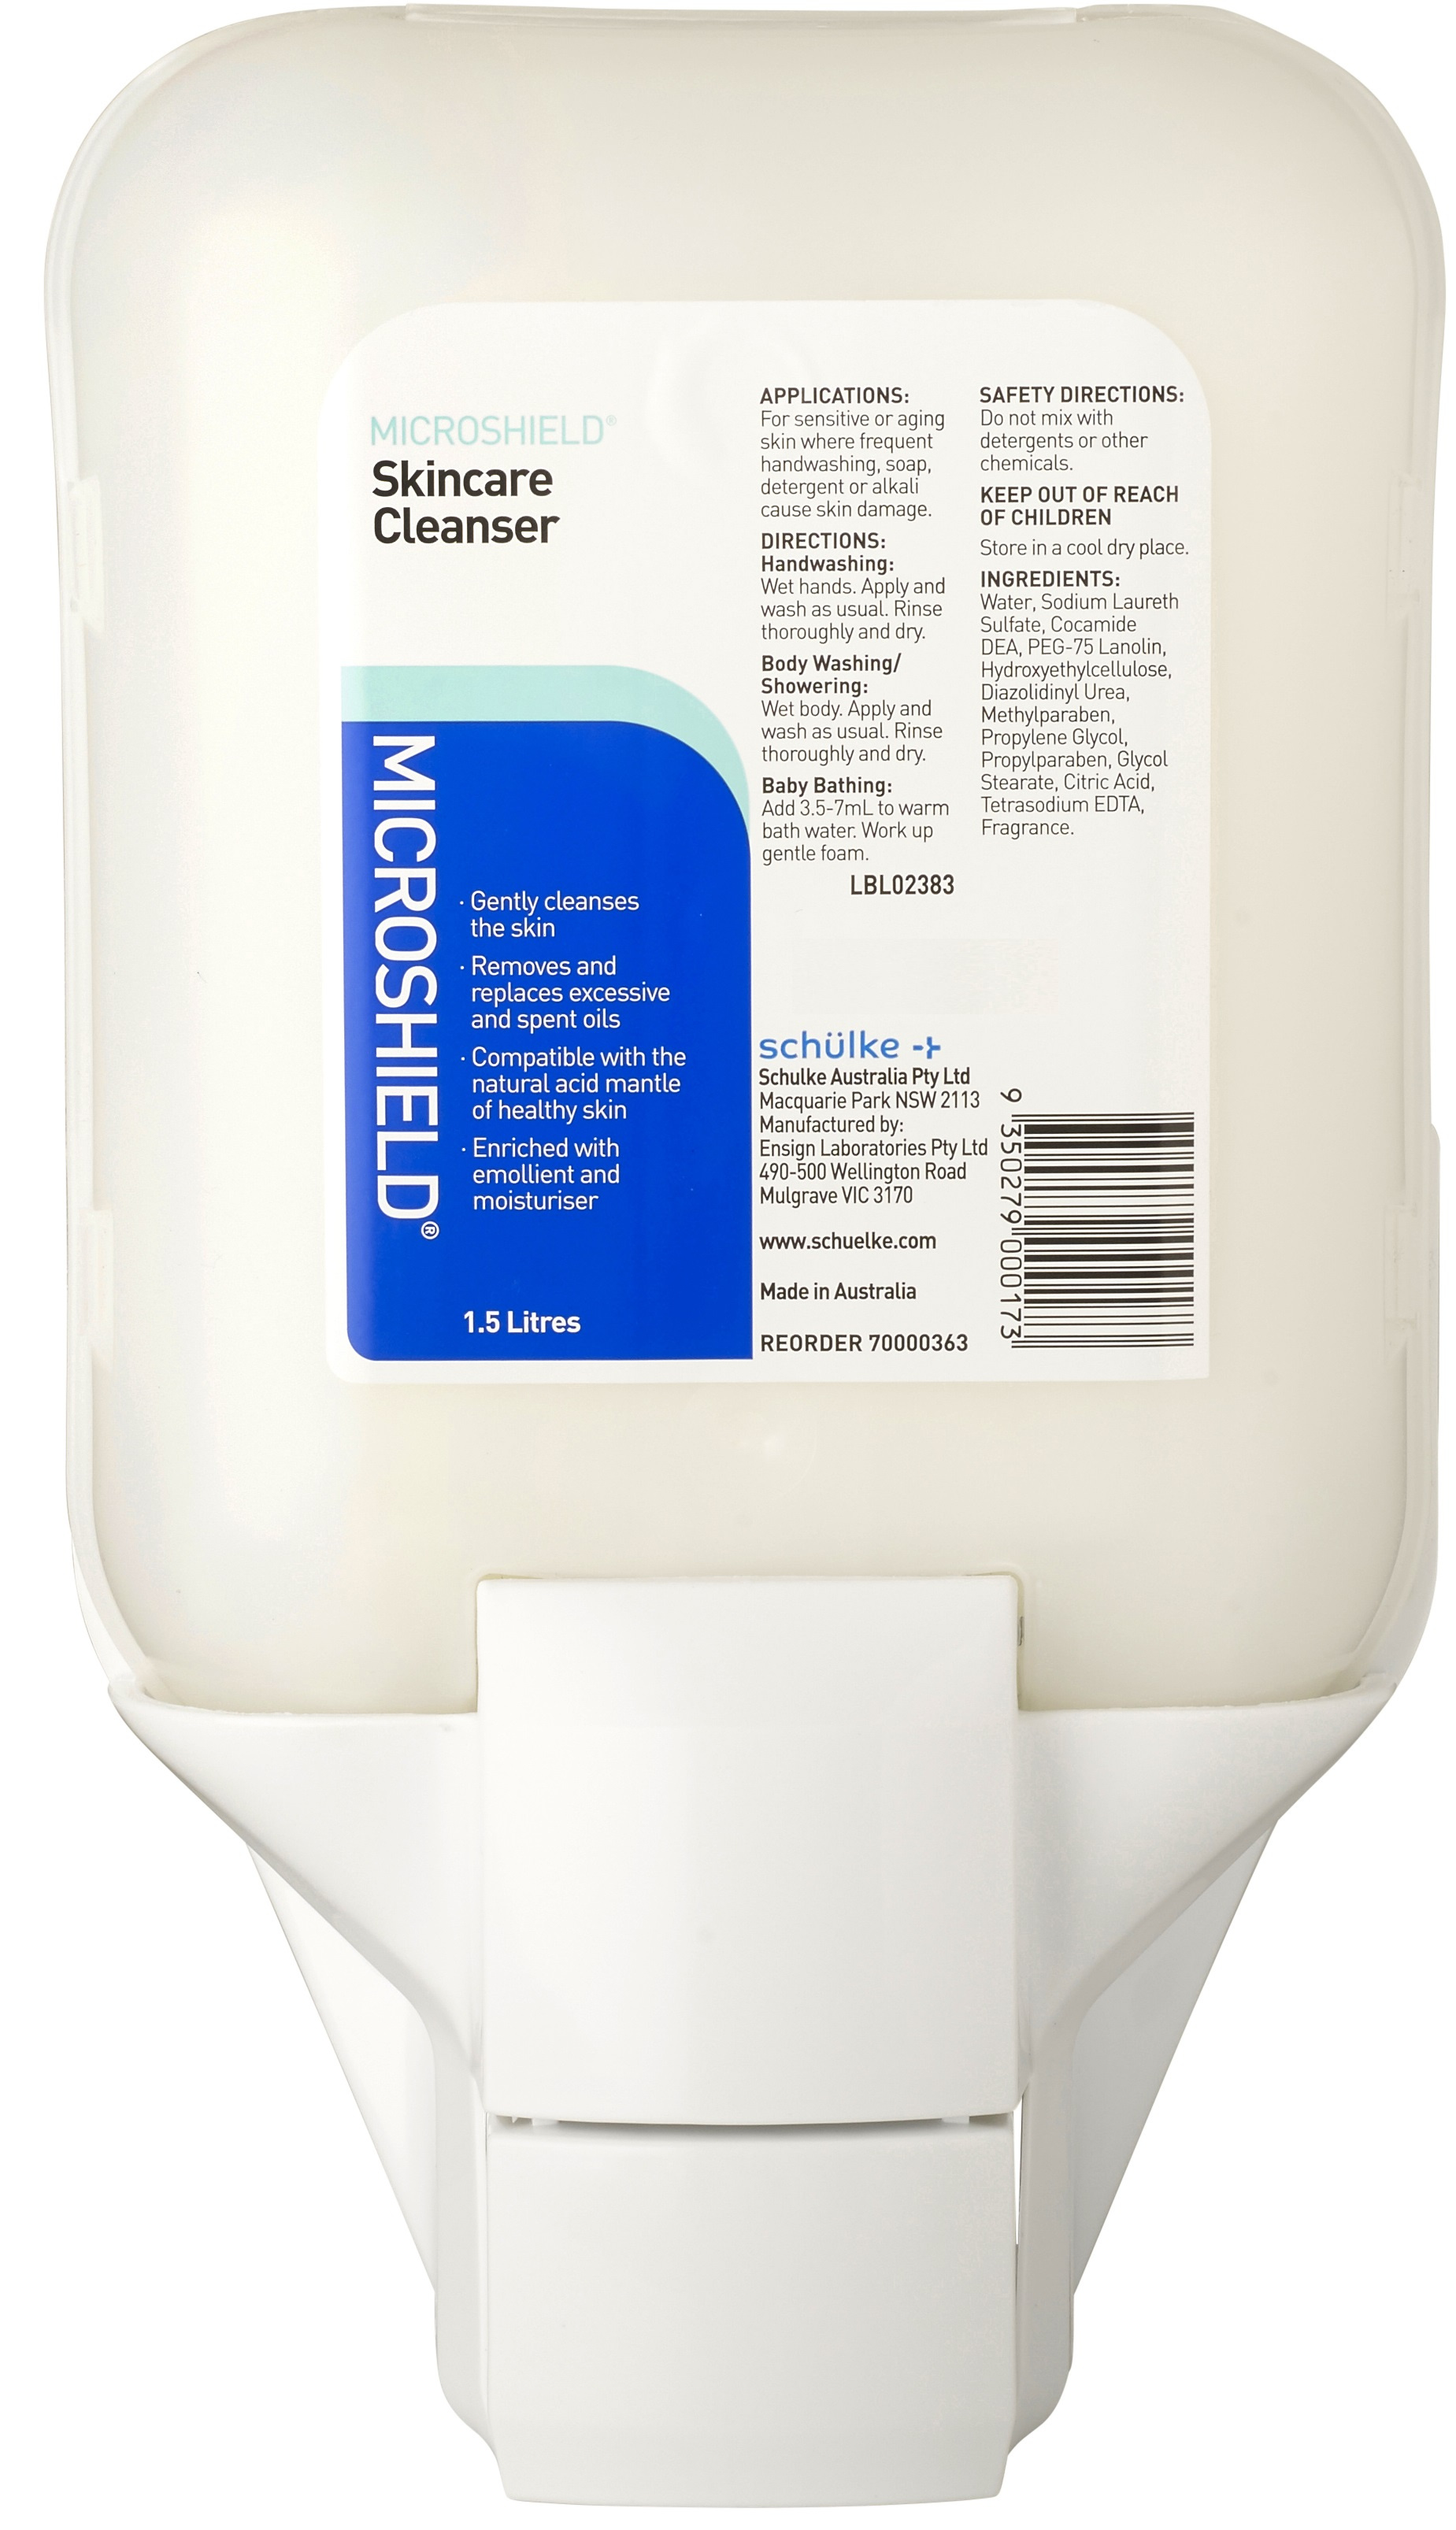 Microshield Skincare Cleanser 1.5L image 0